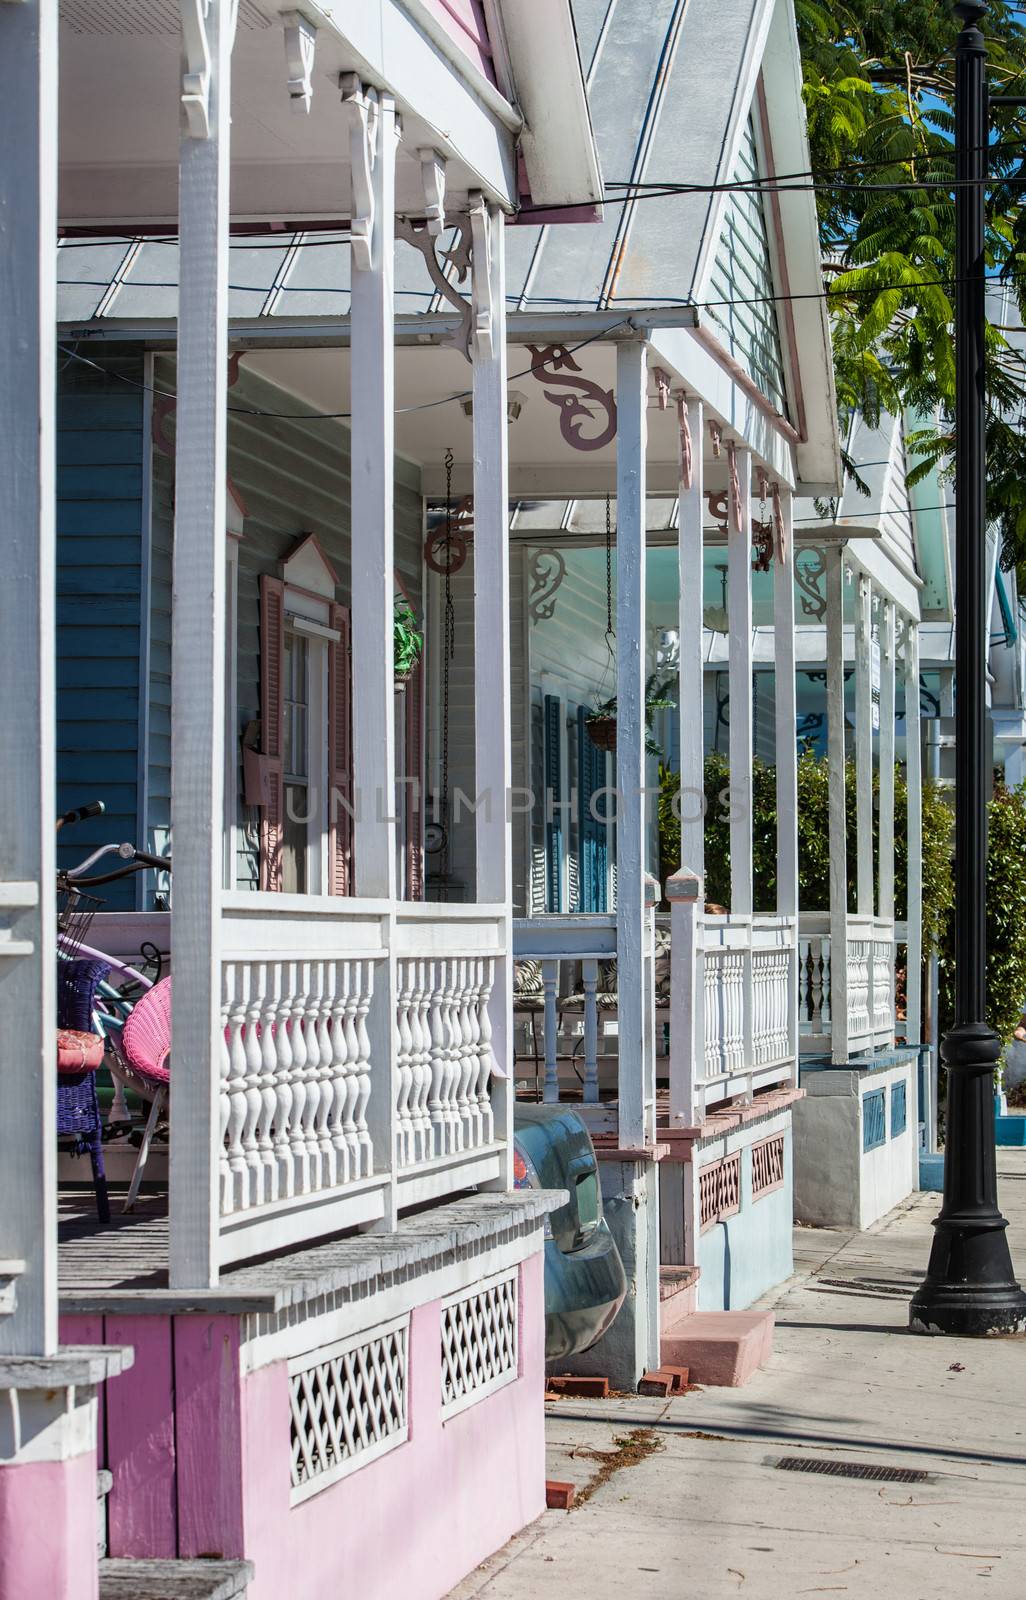 Home detail in Key West by Creatista